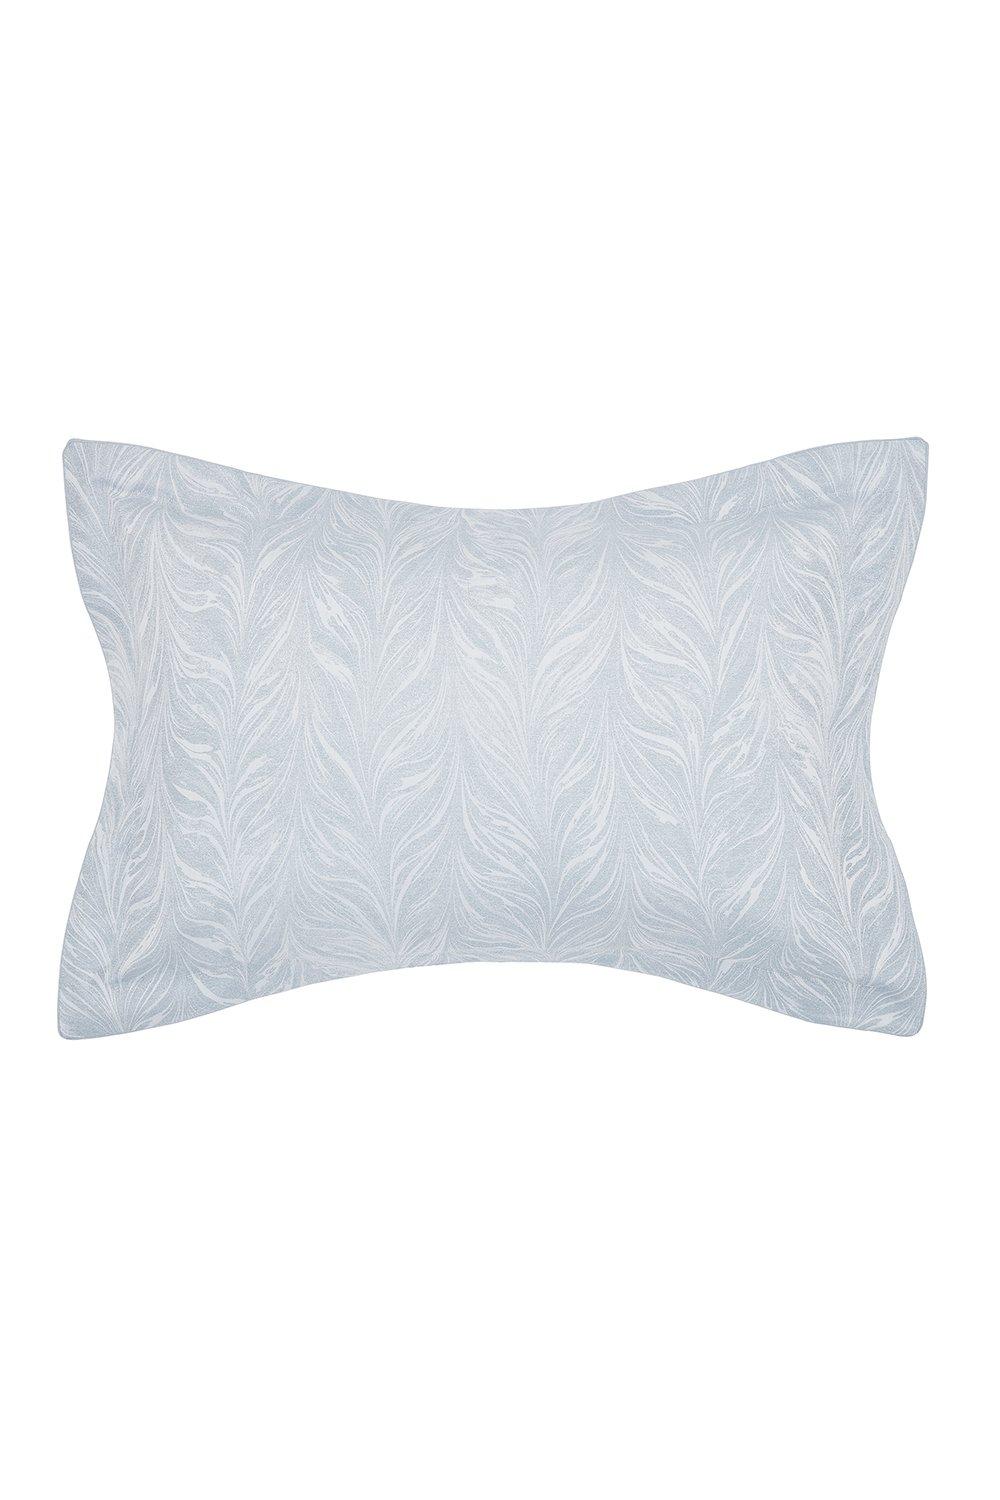 'Ebru' Cotton Sateen Oxford Pillowcase